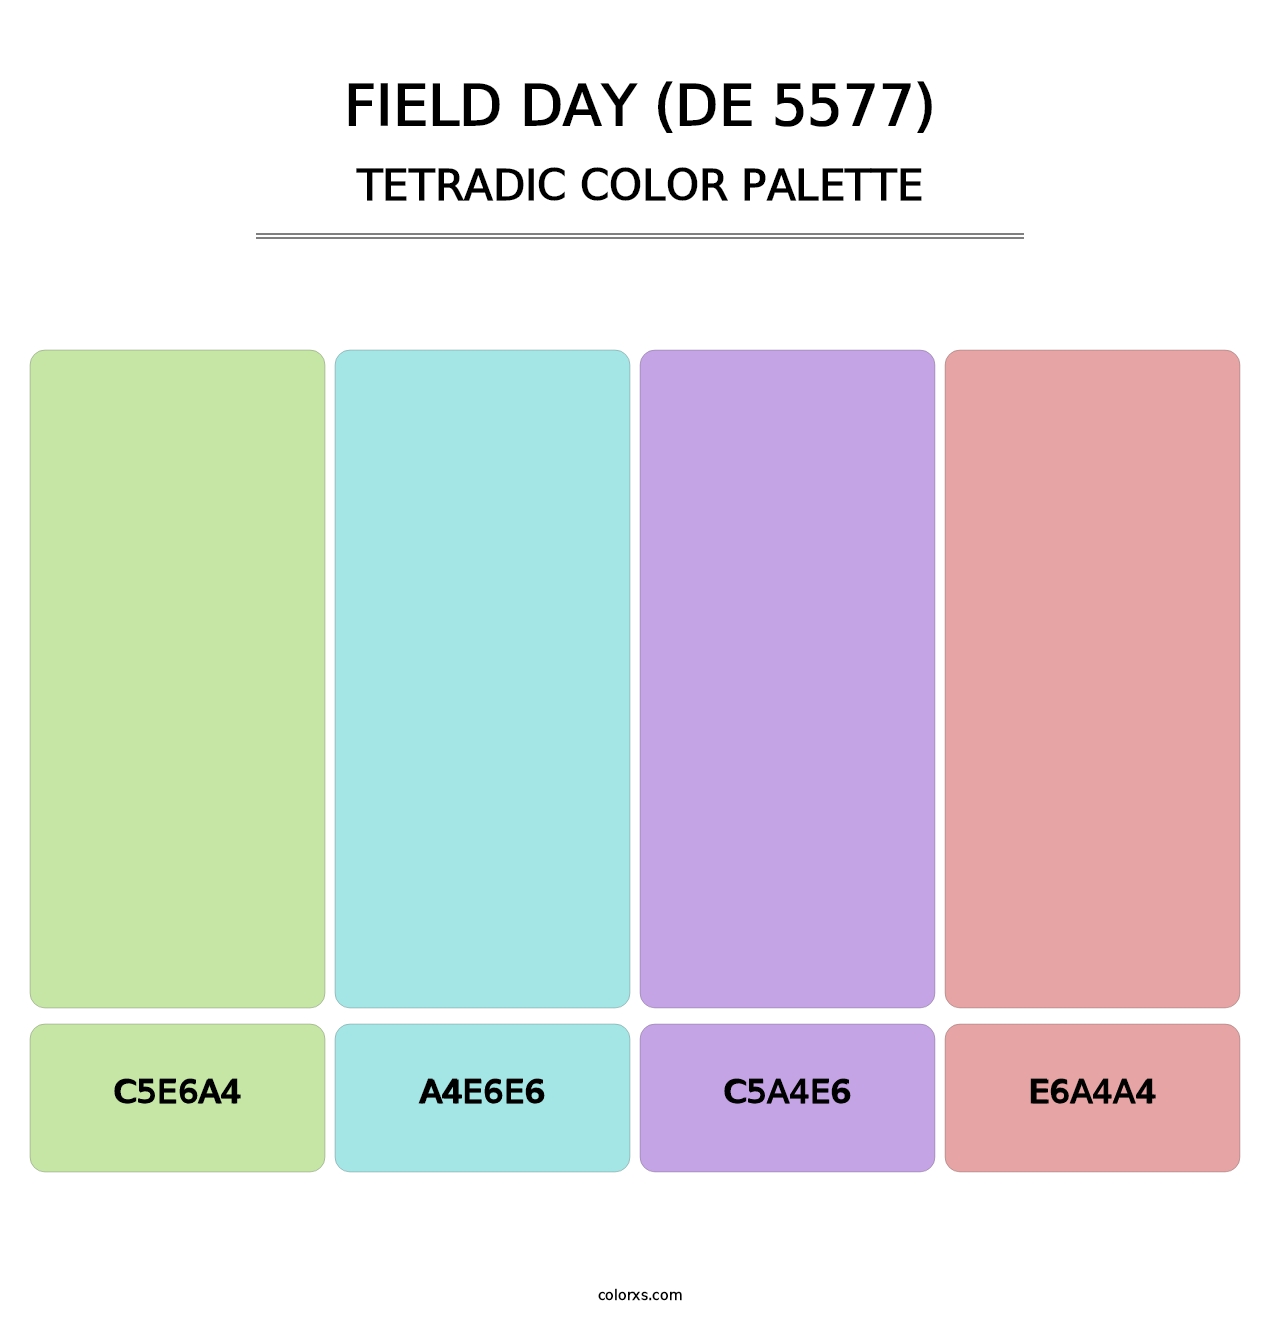 Field Day (DE 5577) - Tetradic Color Palette